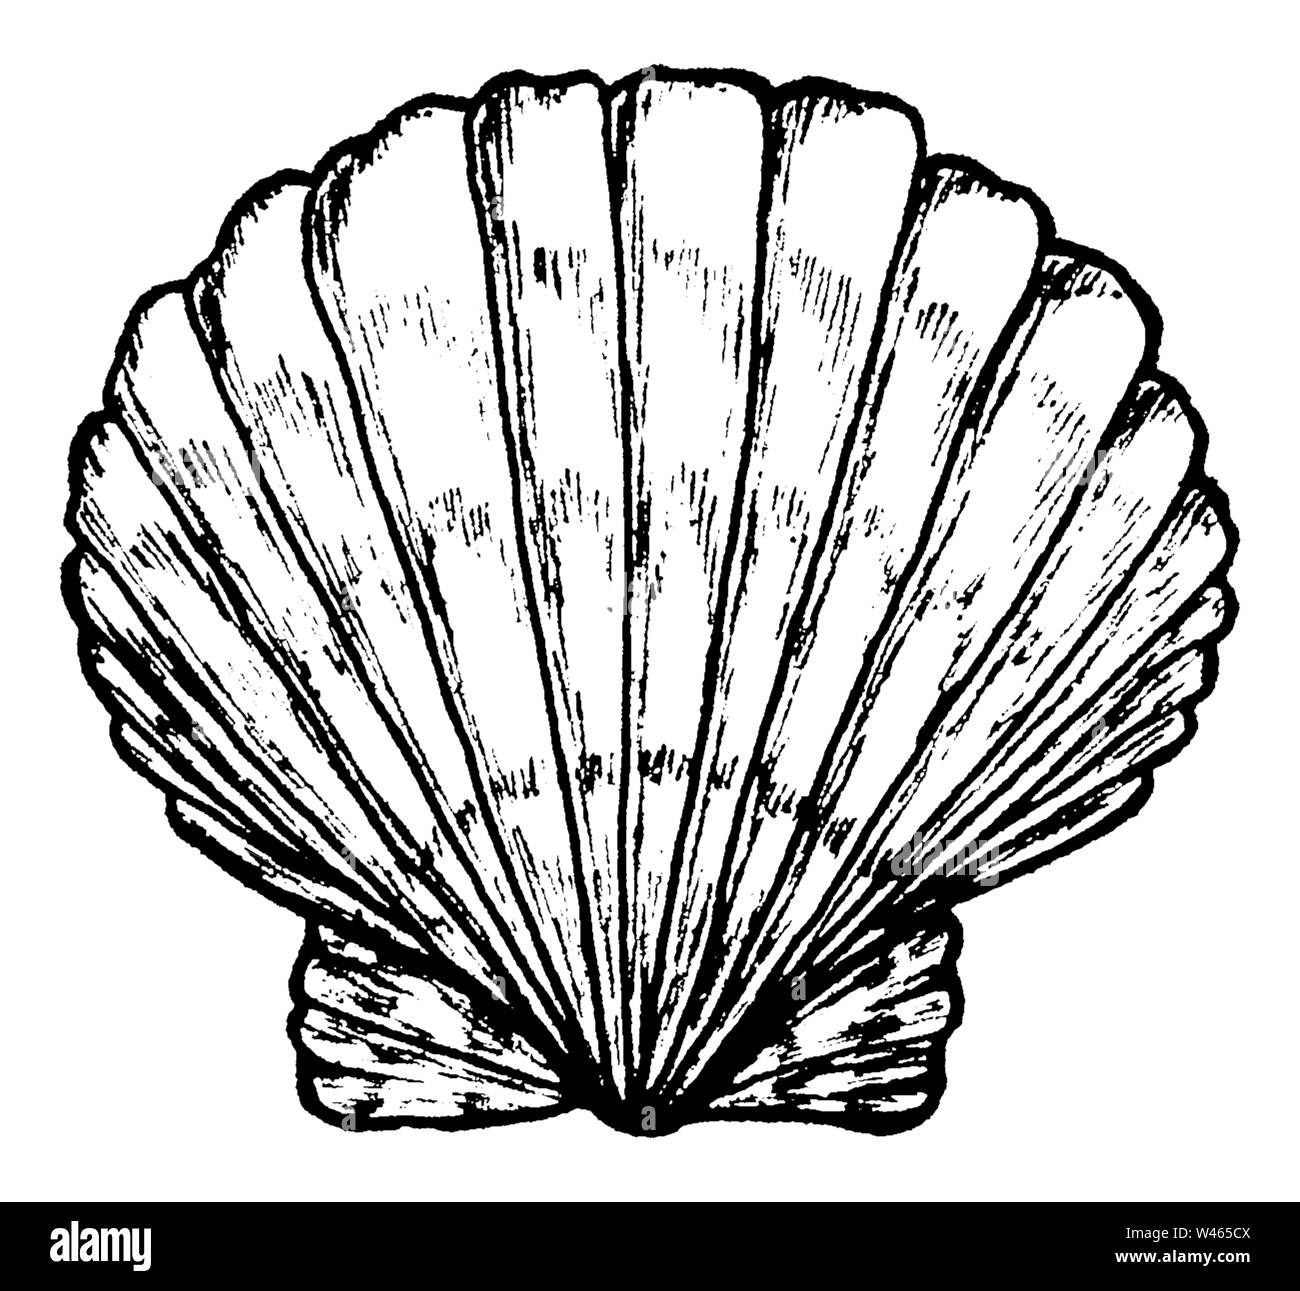 Sea shell. Black and white illustration. Stock Vector